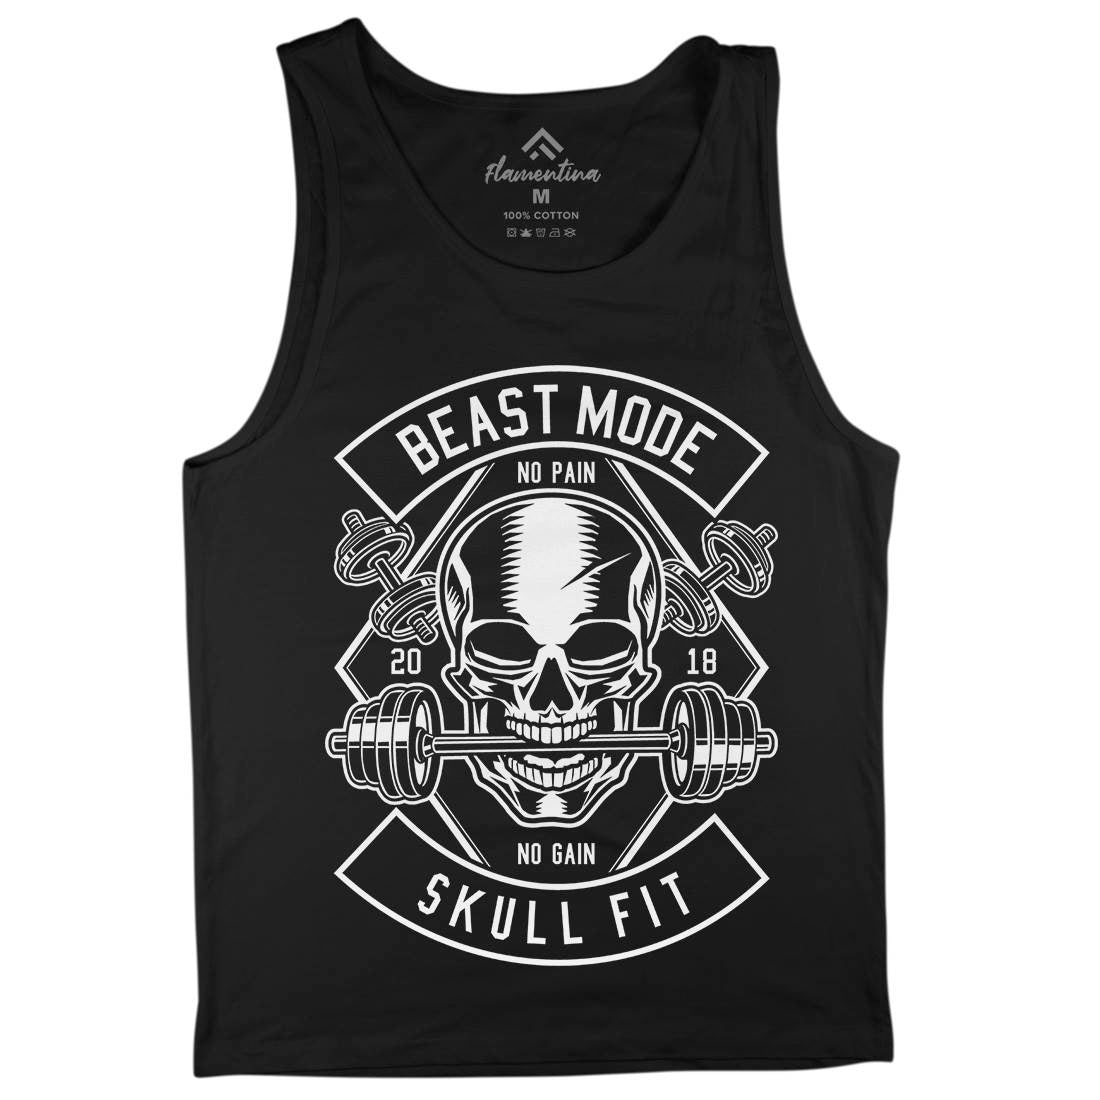 Skull Fit Mens Tank Top Vest Gym B628